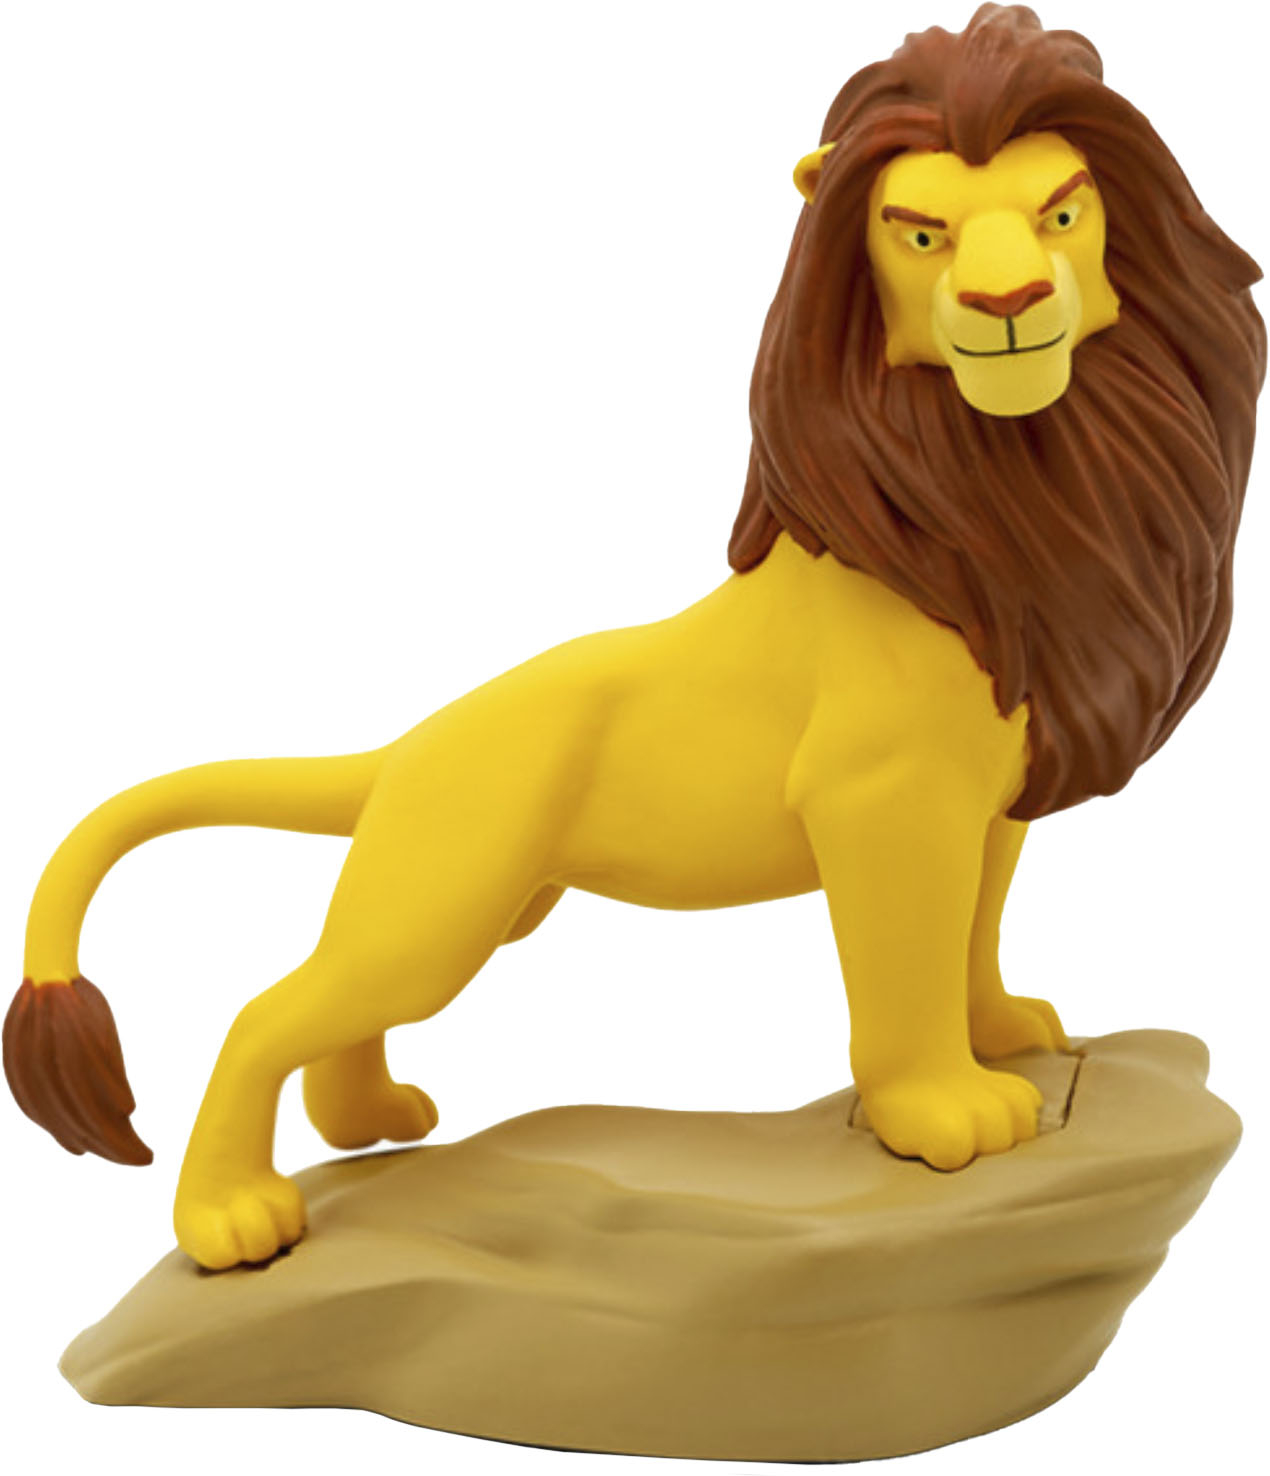 Angle View: Tonies - Disney Lion King Tonie Audio Play Figurine